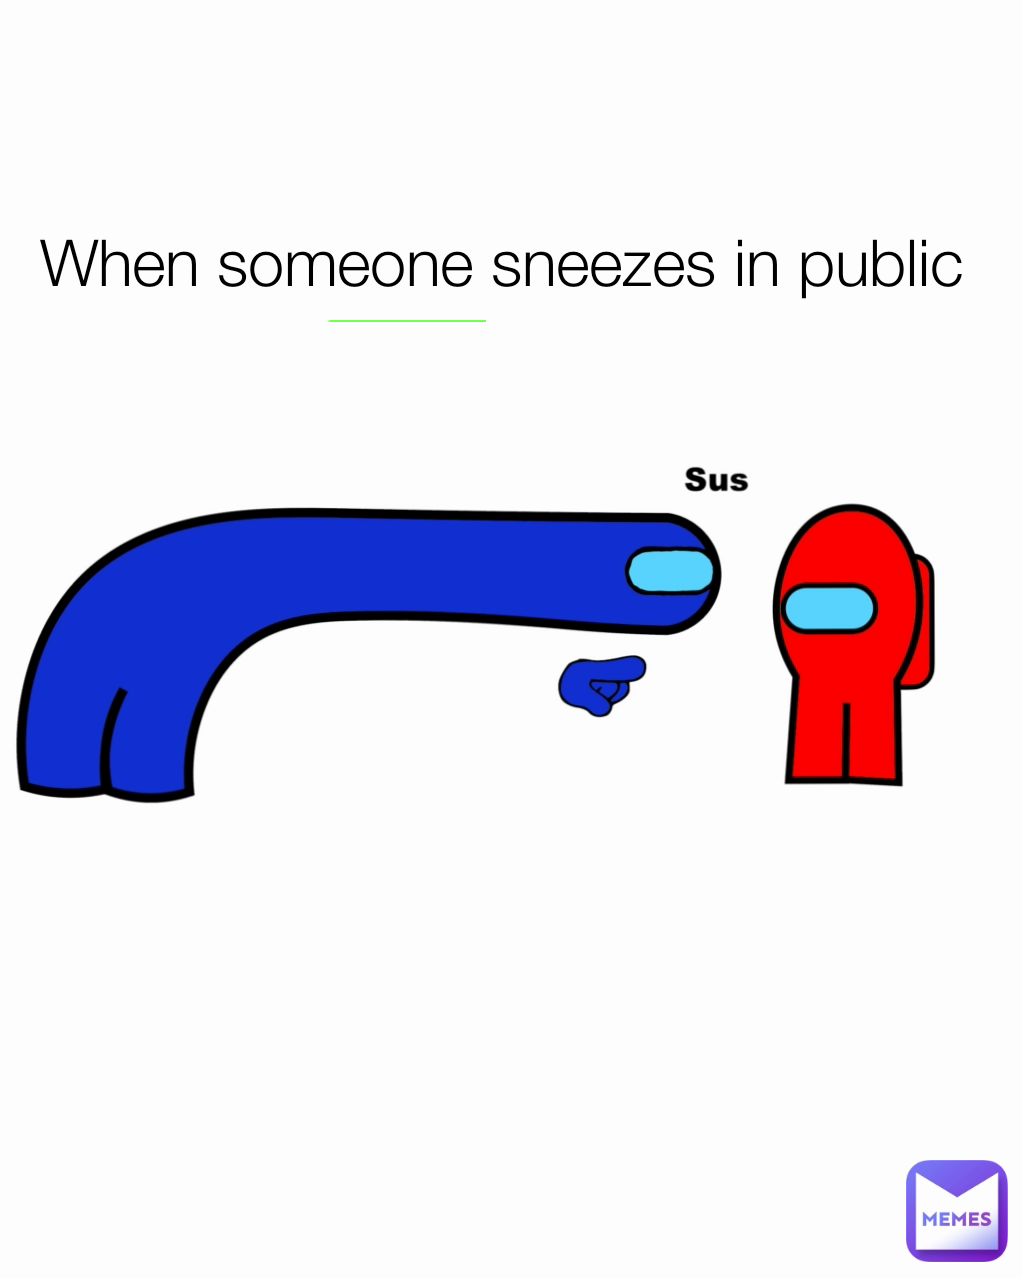 When someone sneezes in public
